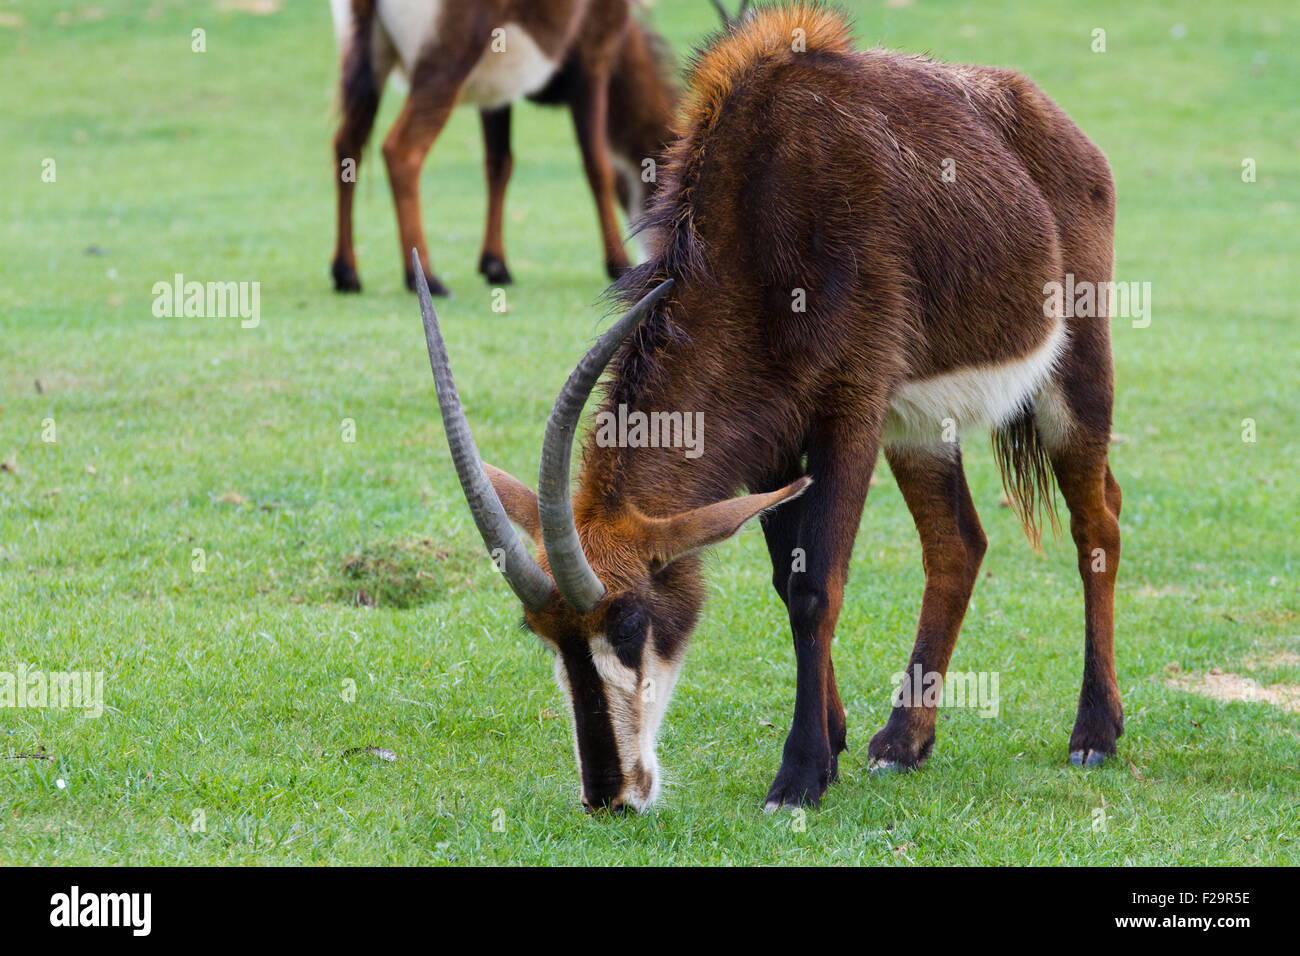 Sable antelope animal eating grass Stock Photo